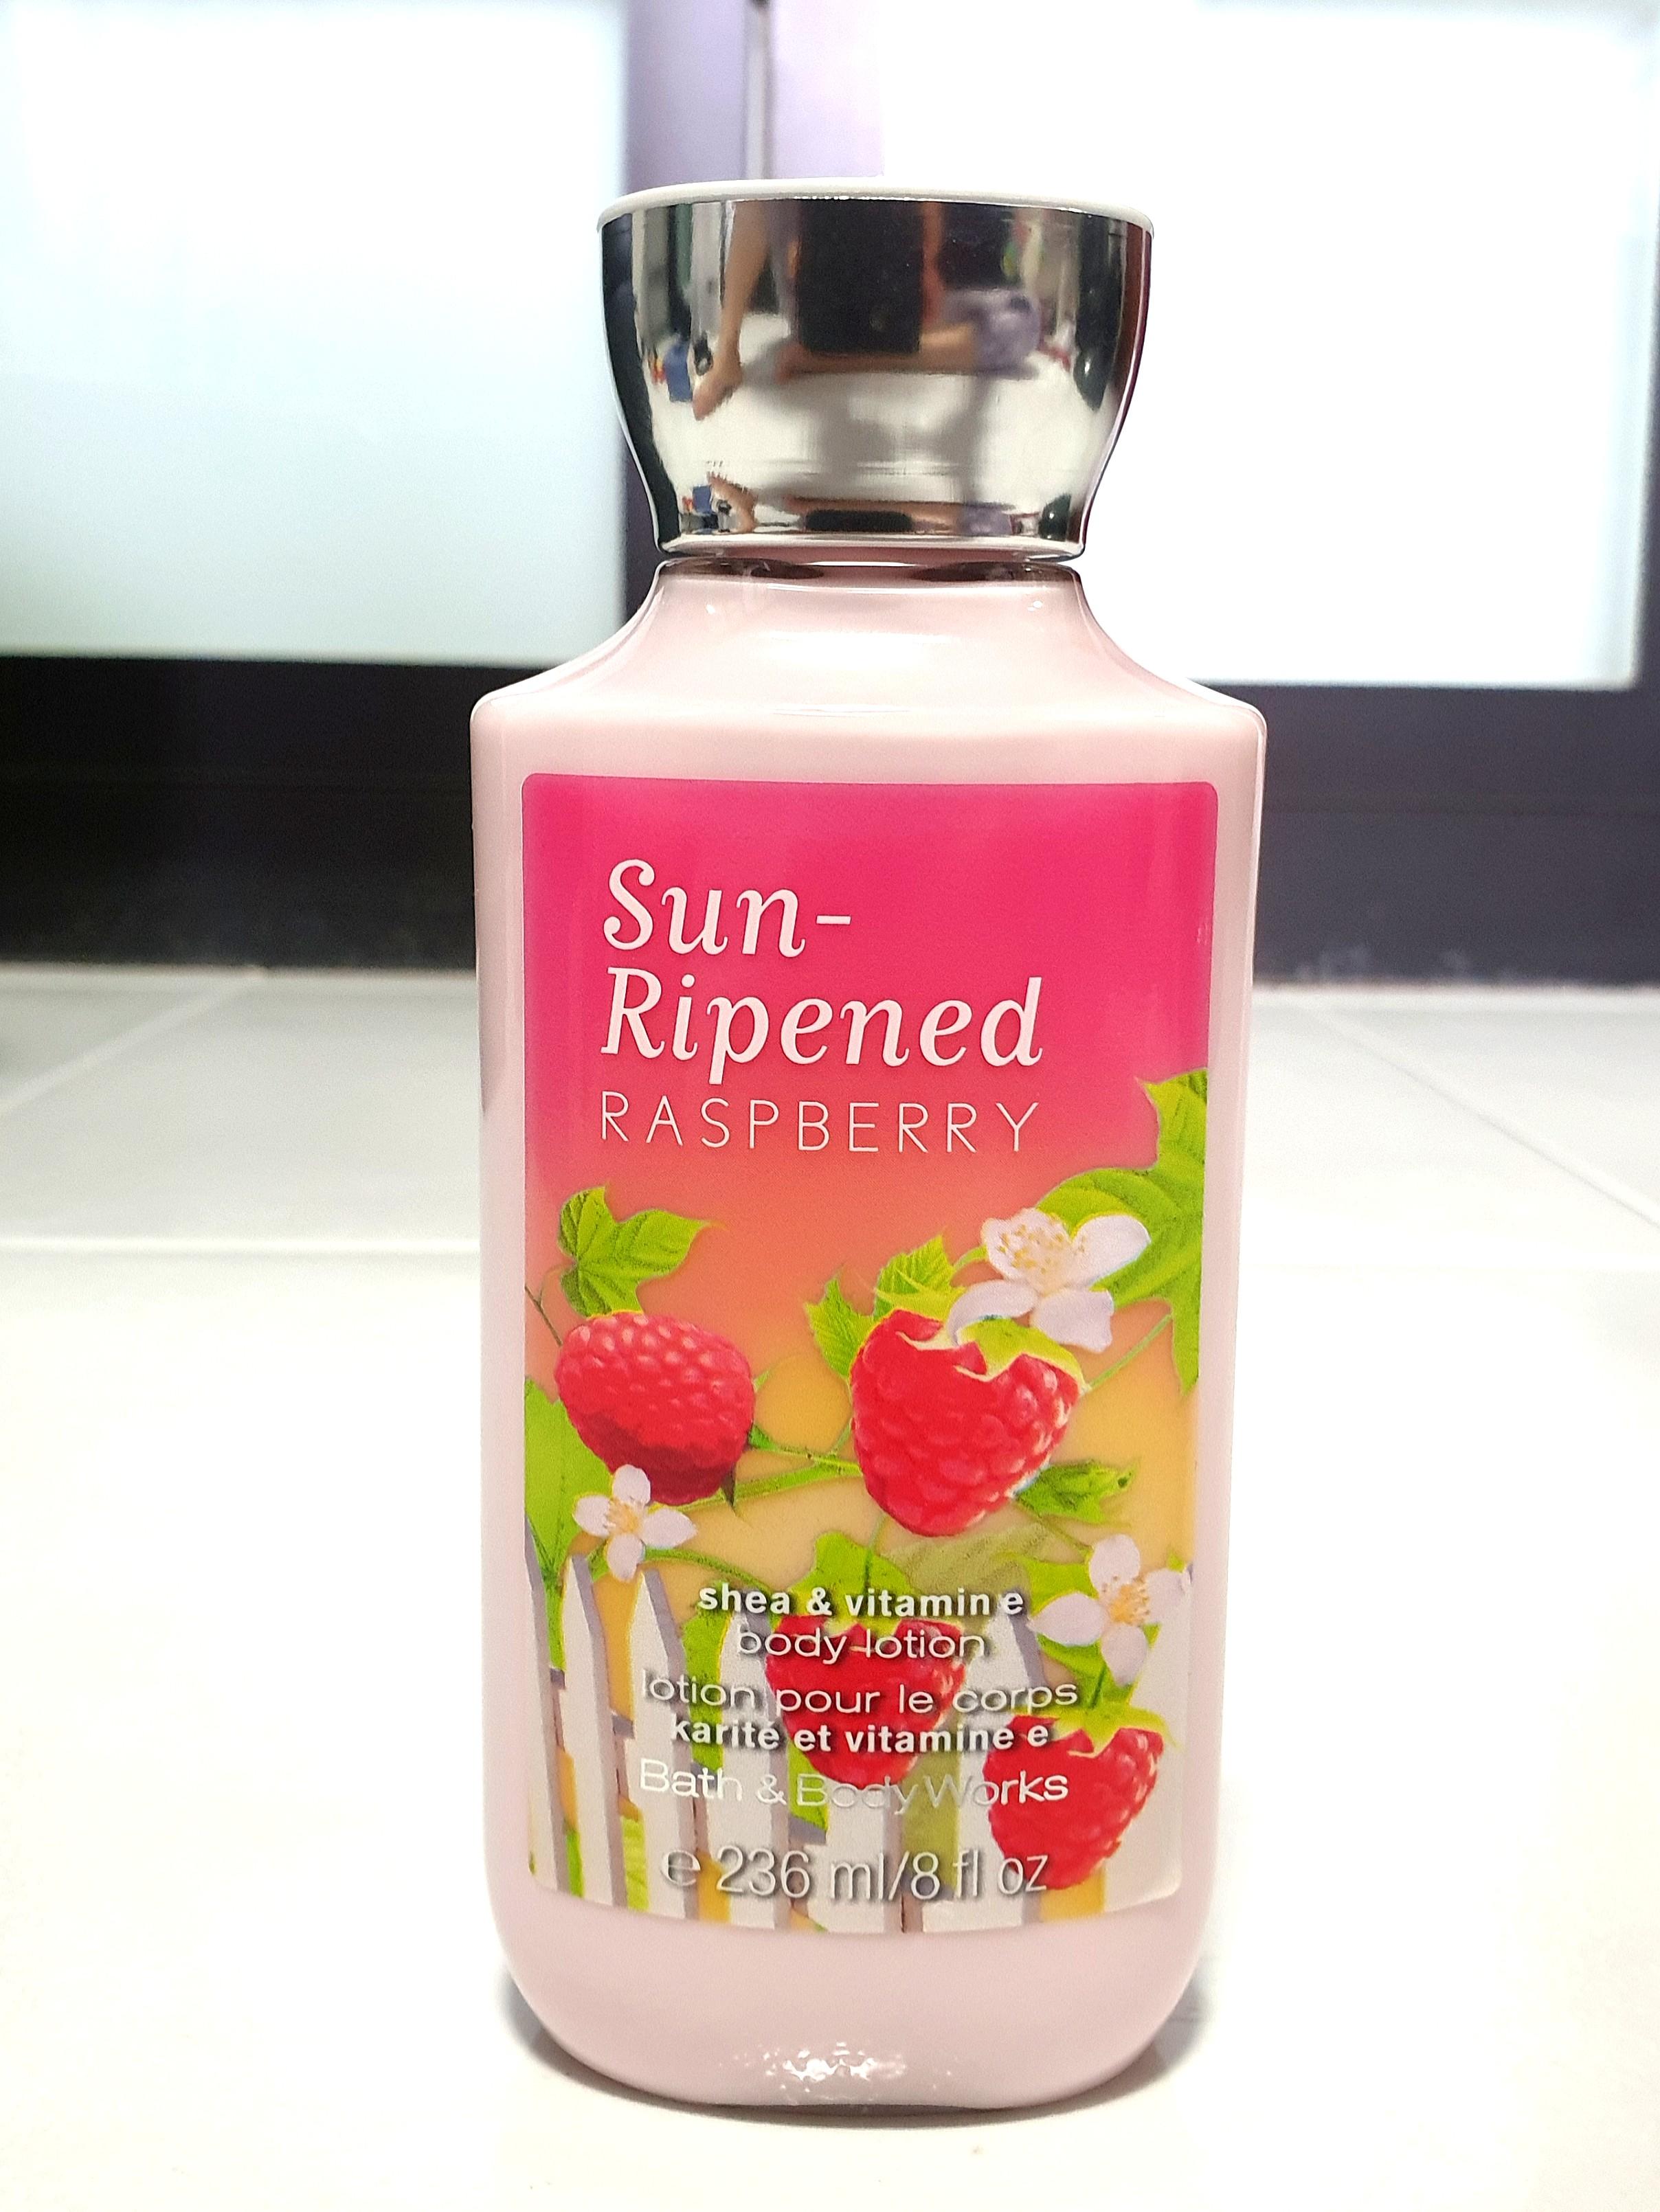 Bath & Body Works Sun Ripened Raspberry Body Lotion - Reviews